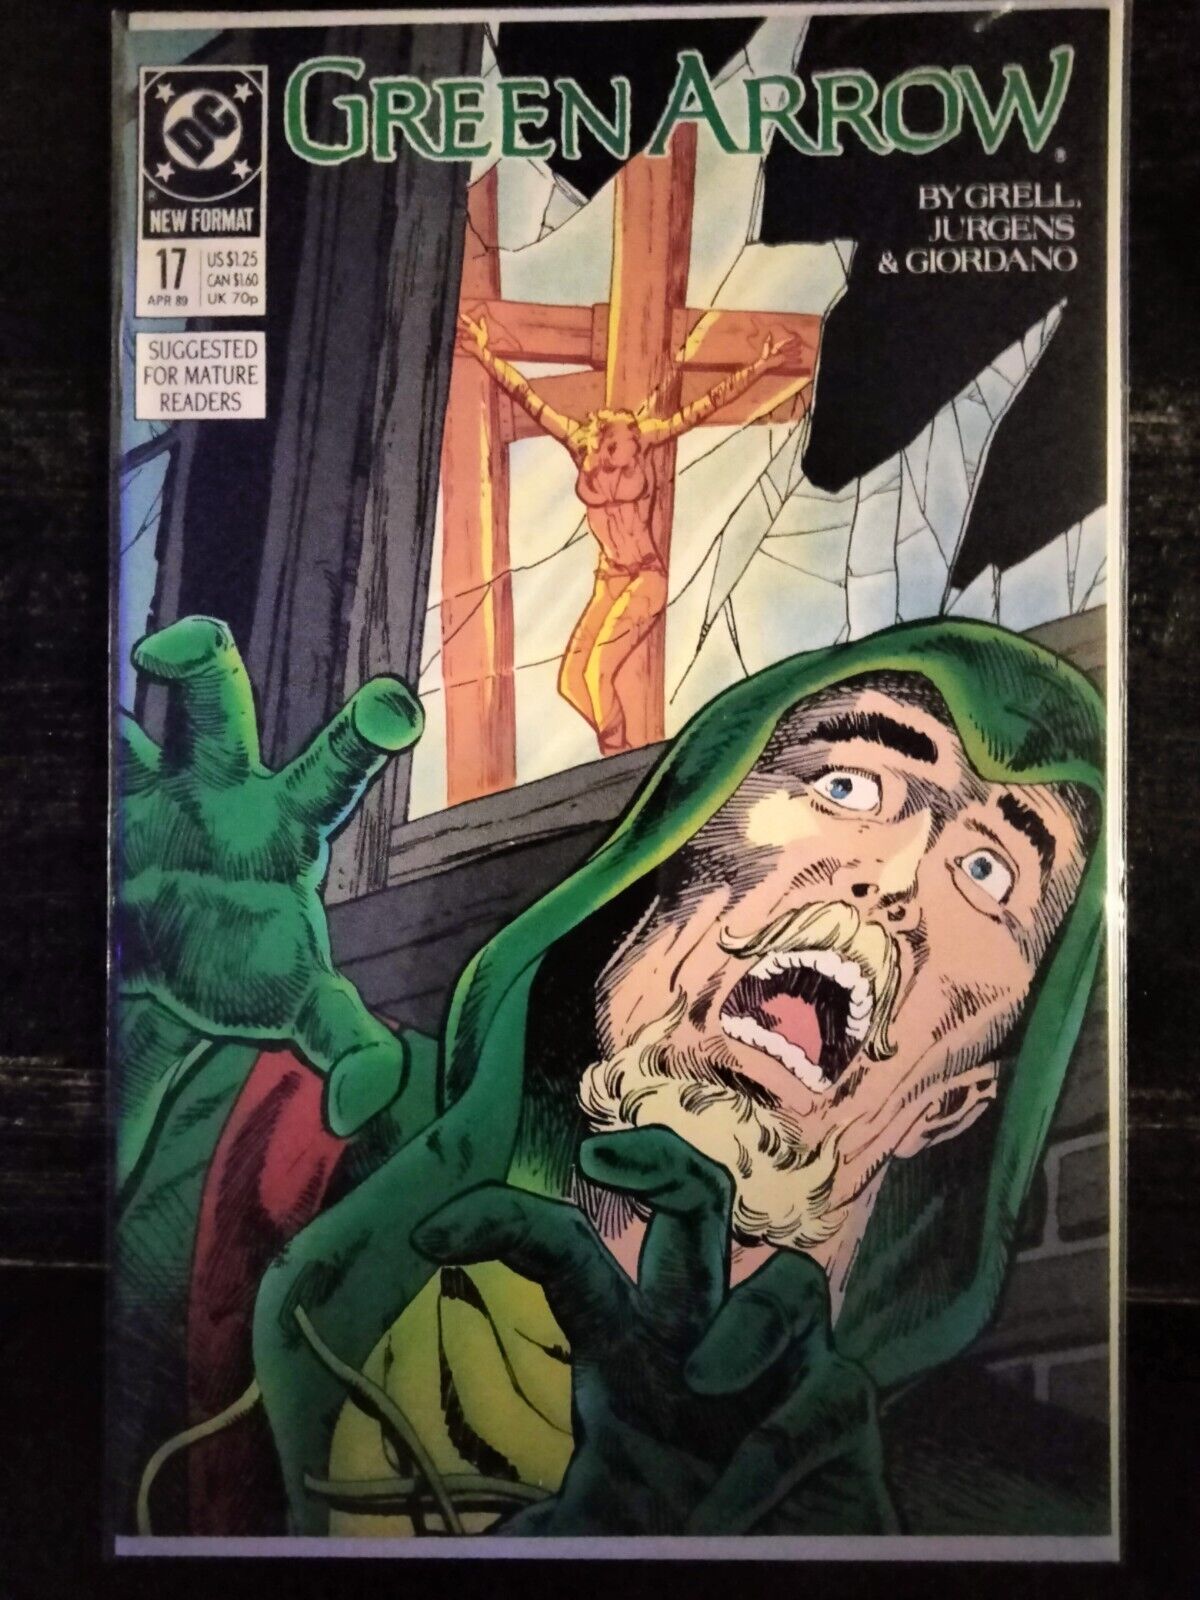 Green Arrow (1988 series) #17 in Near Mint minus condition. DC comics [e: